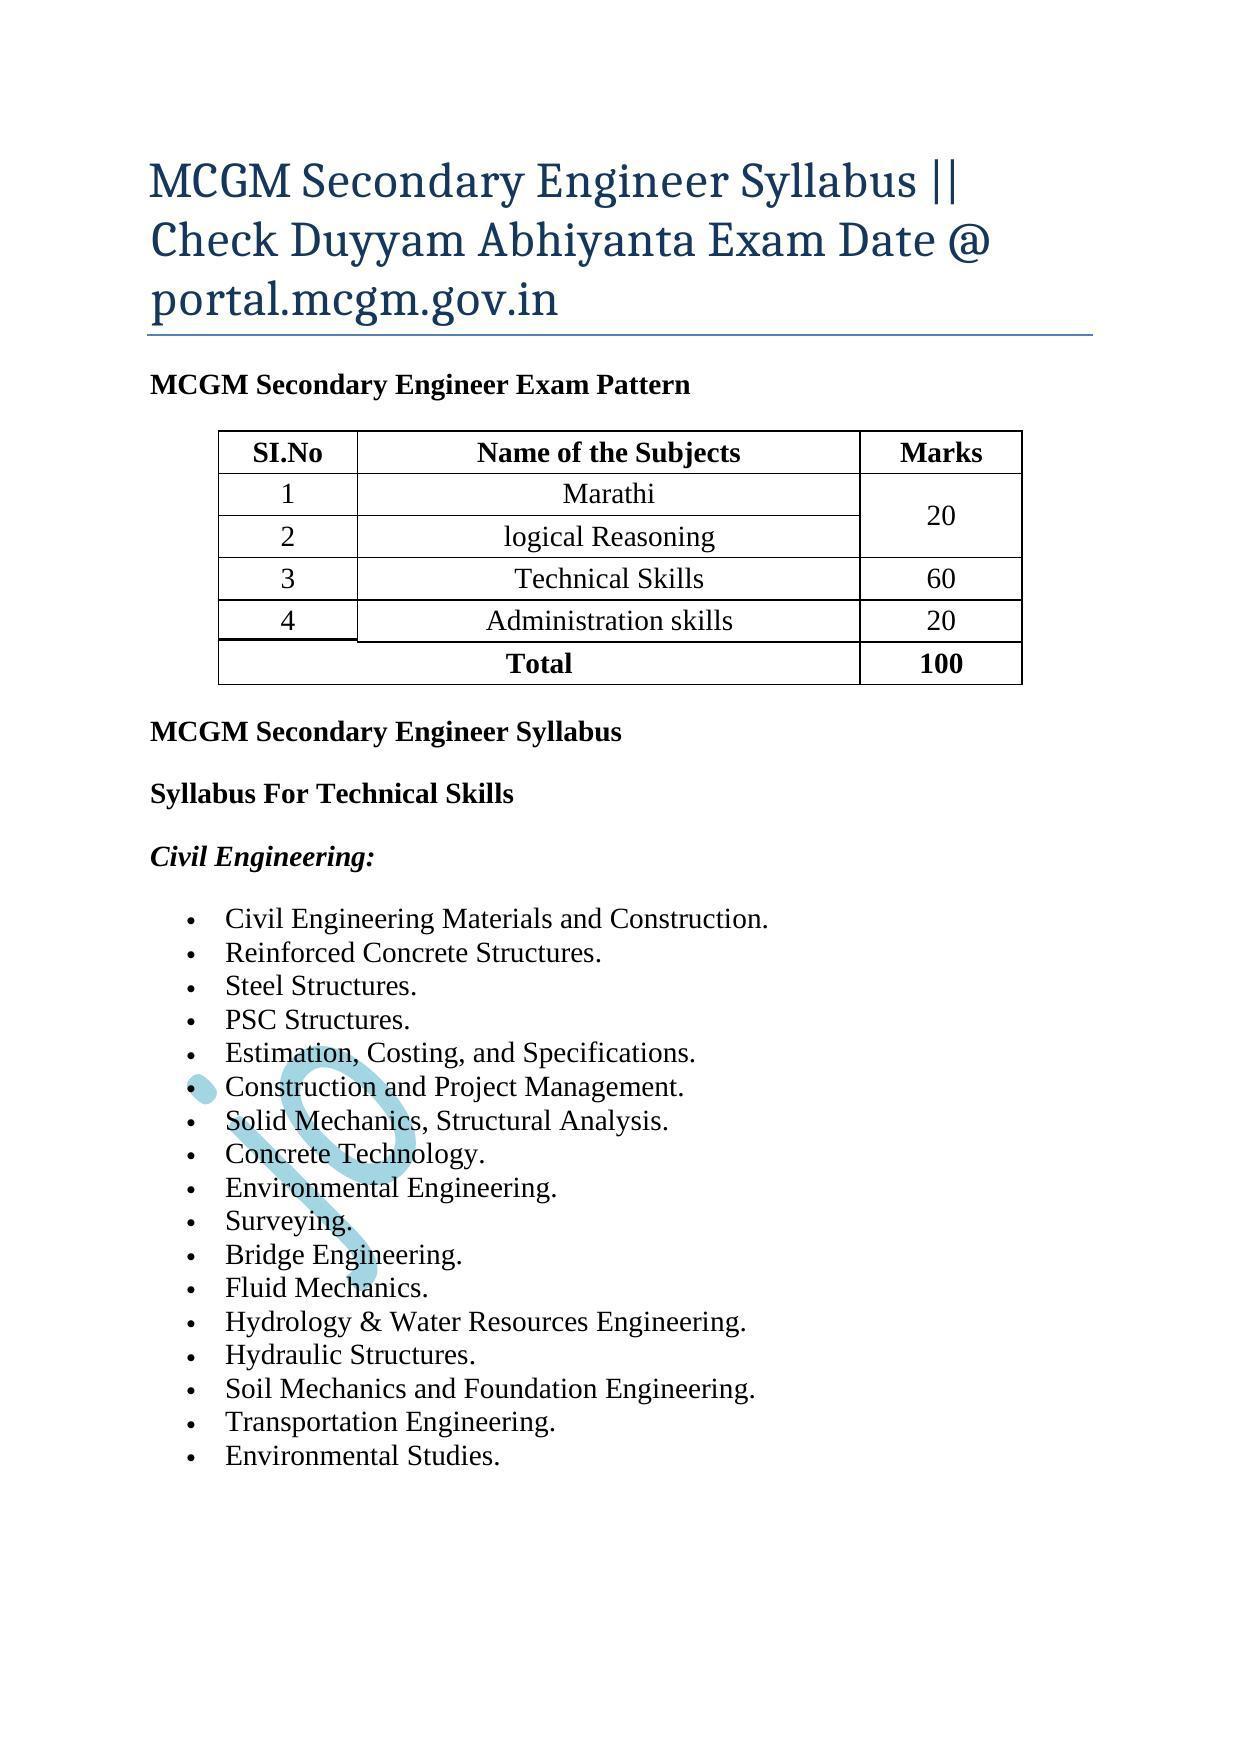 MCGM Secondary Engineer Syllabus - Page 3